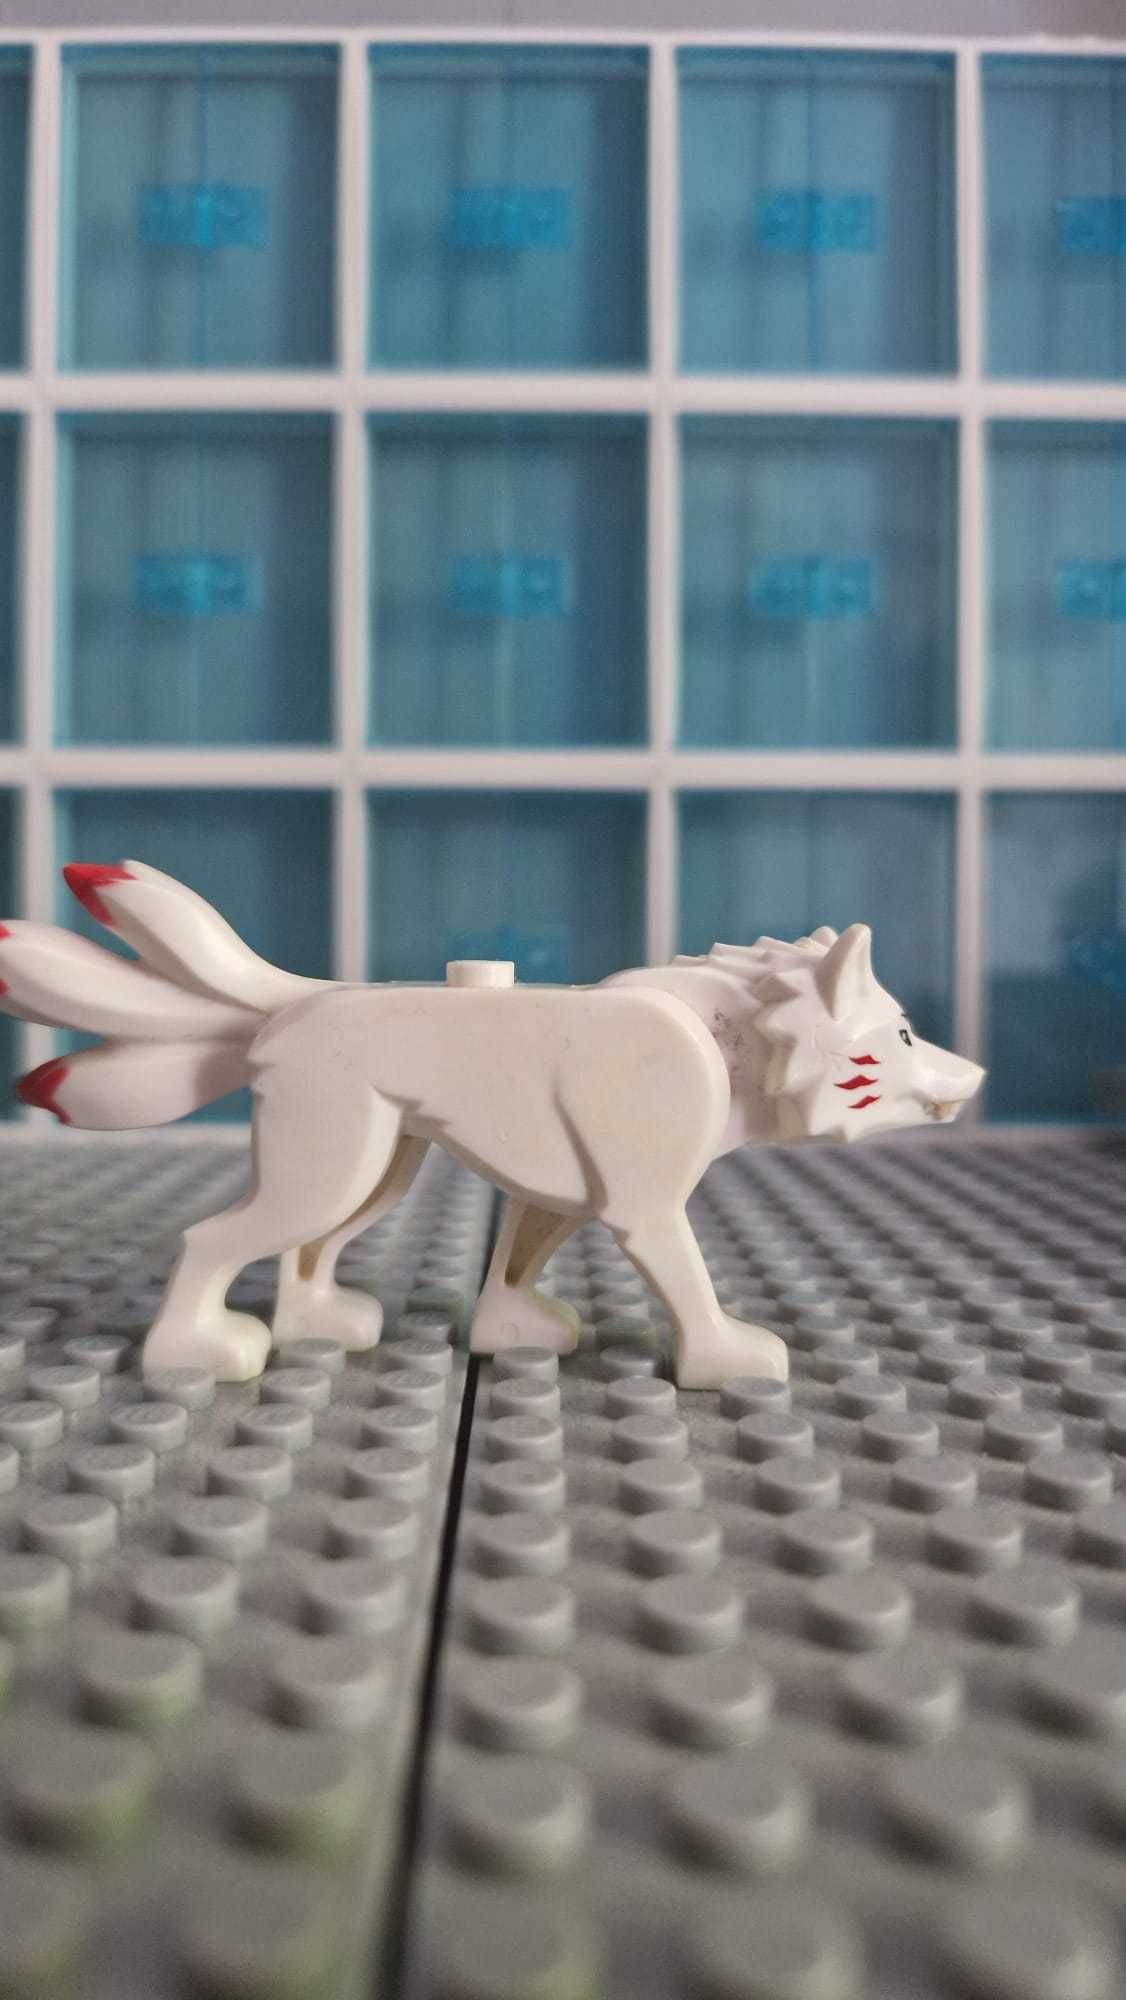 LEGO ninjago biały wilk Lloyds,Akira